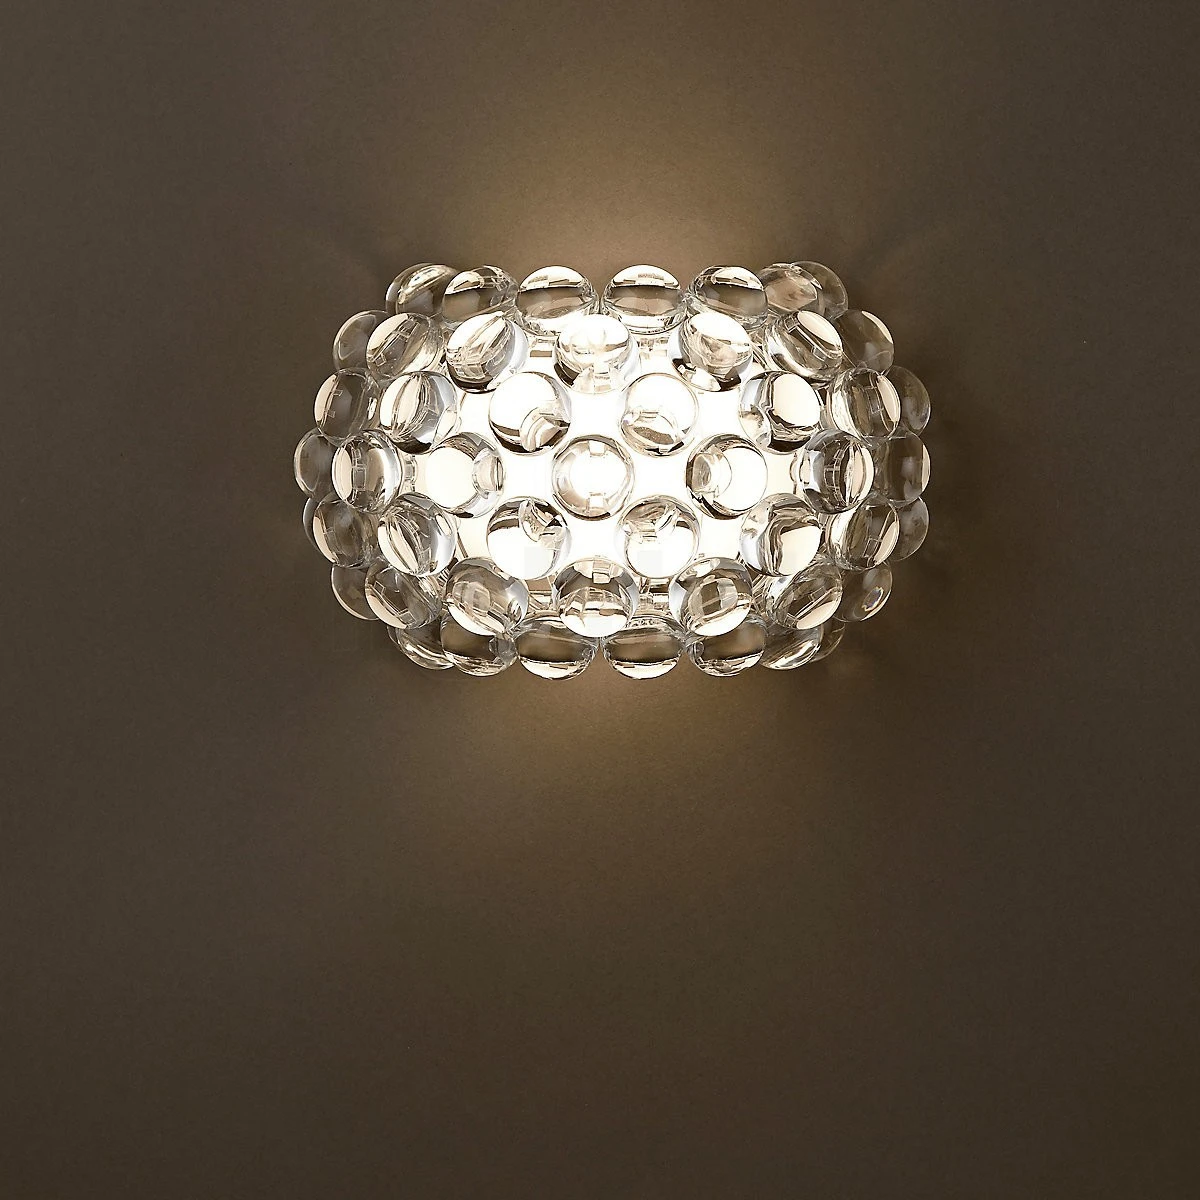 

Italian Caboche Wall Lamp Designer Led Wall Lamps For Living Room Bedroom Corridor Nordic Loft Decor Sconce Bedside Wall Light